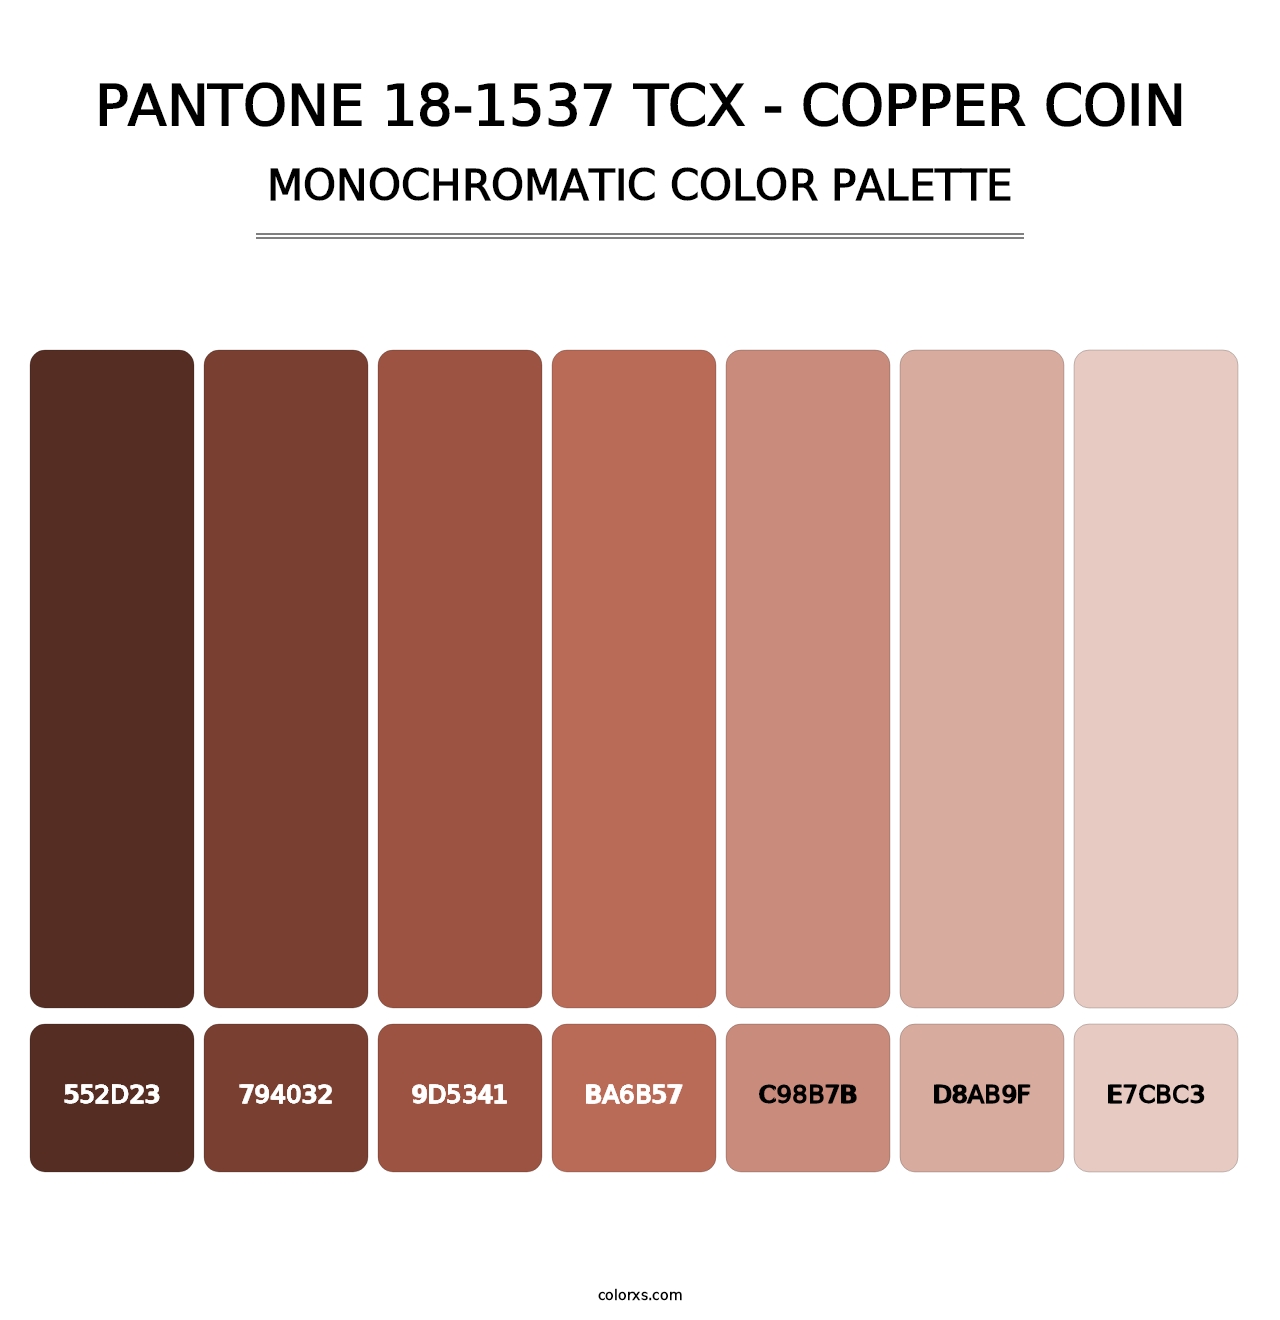 PANTONE 18-1537 TCX - Copper Coin - Monochromatic Color Palette